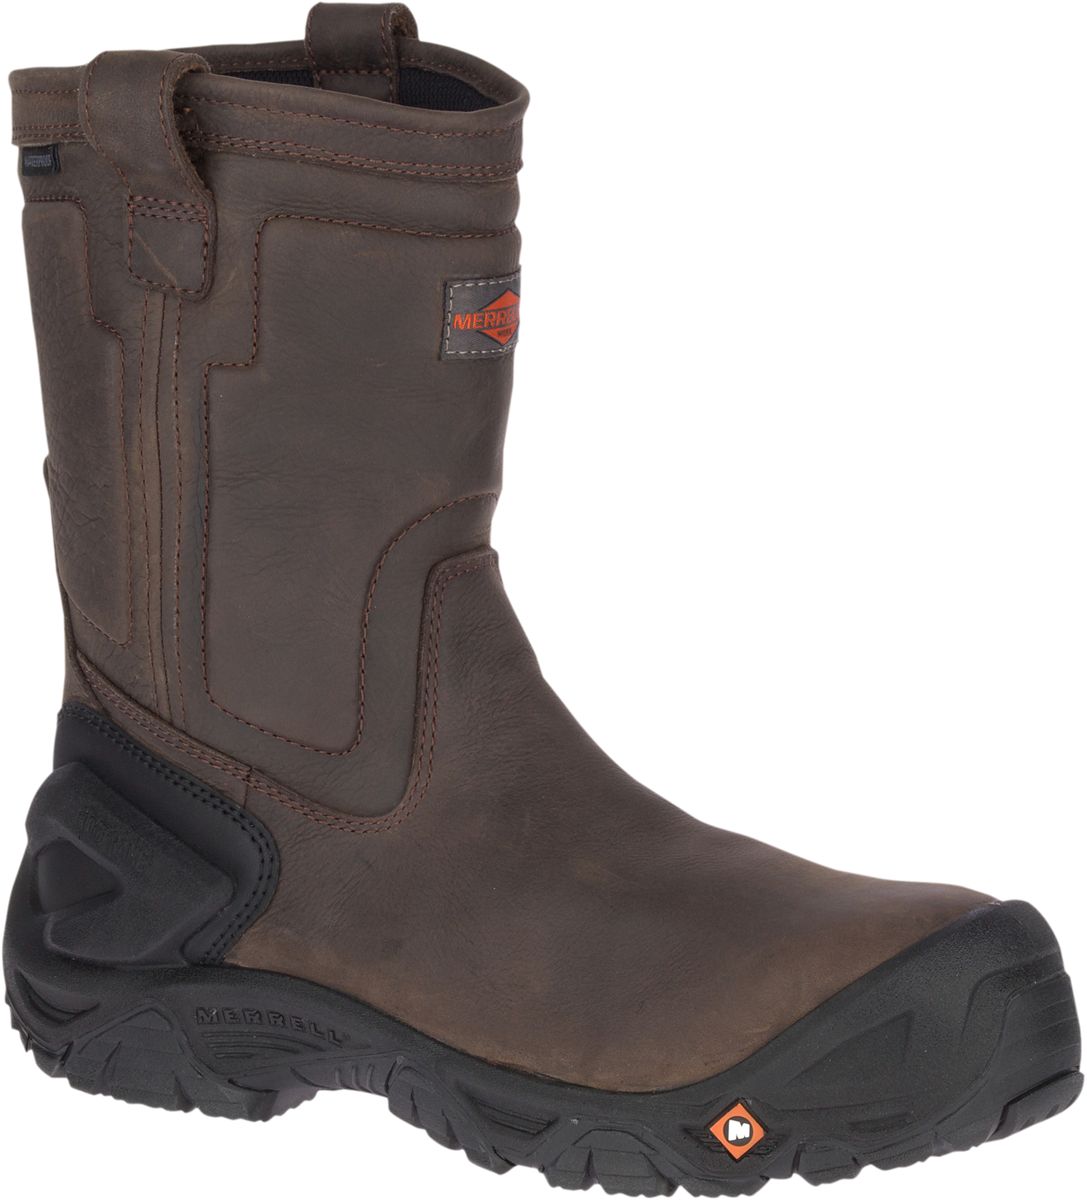 Boot Wide Width - Boots | Merrell